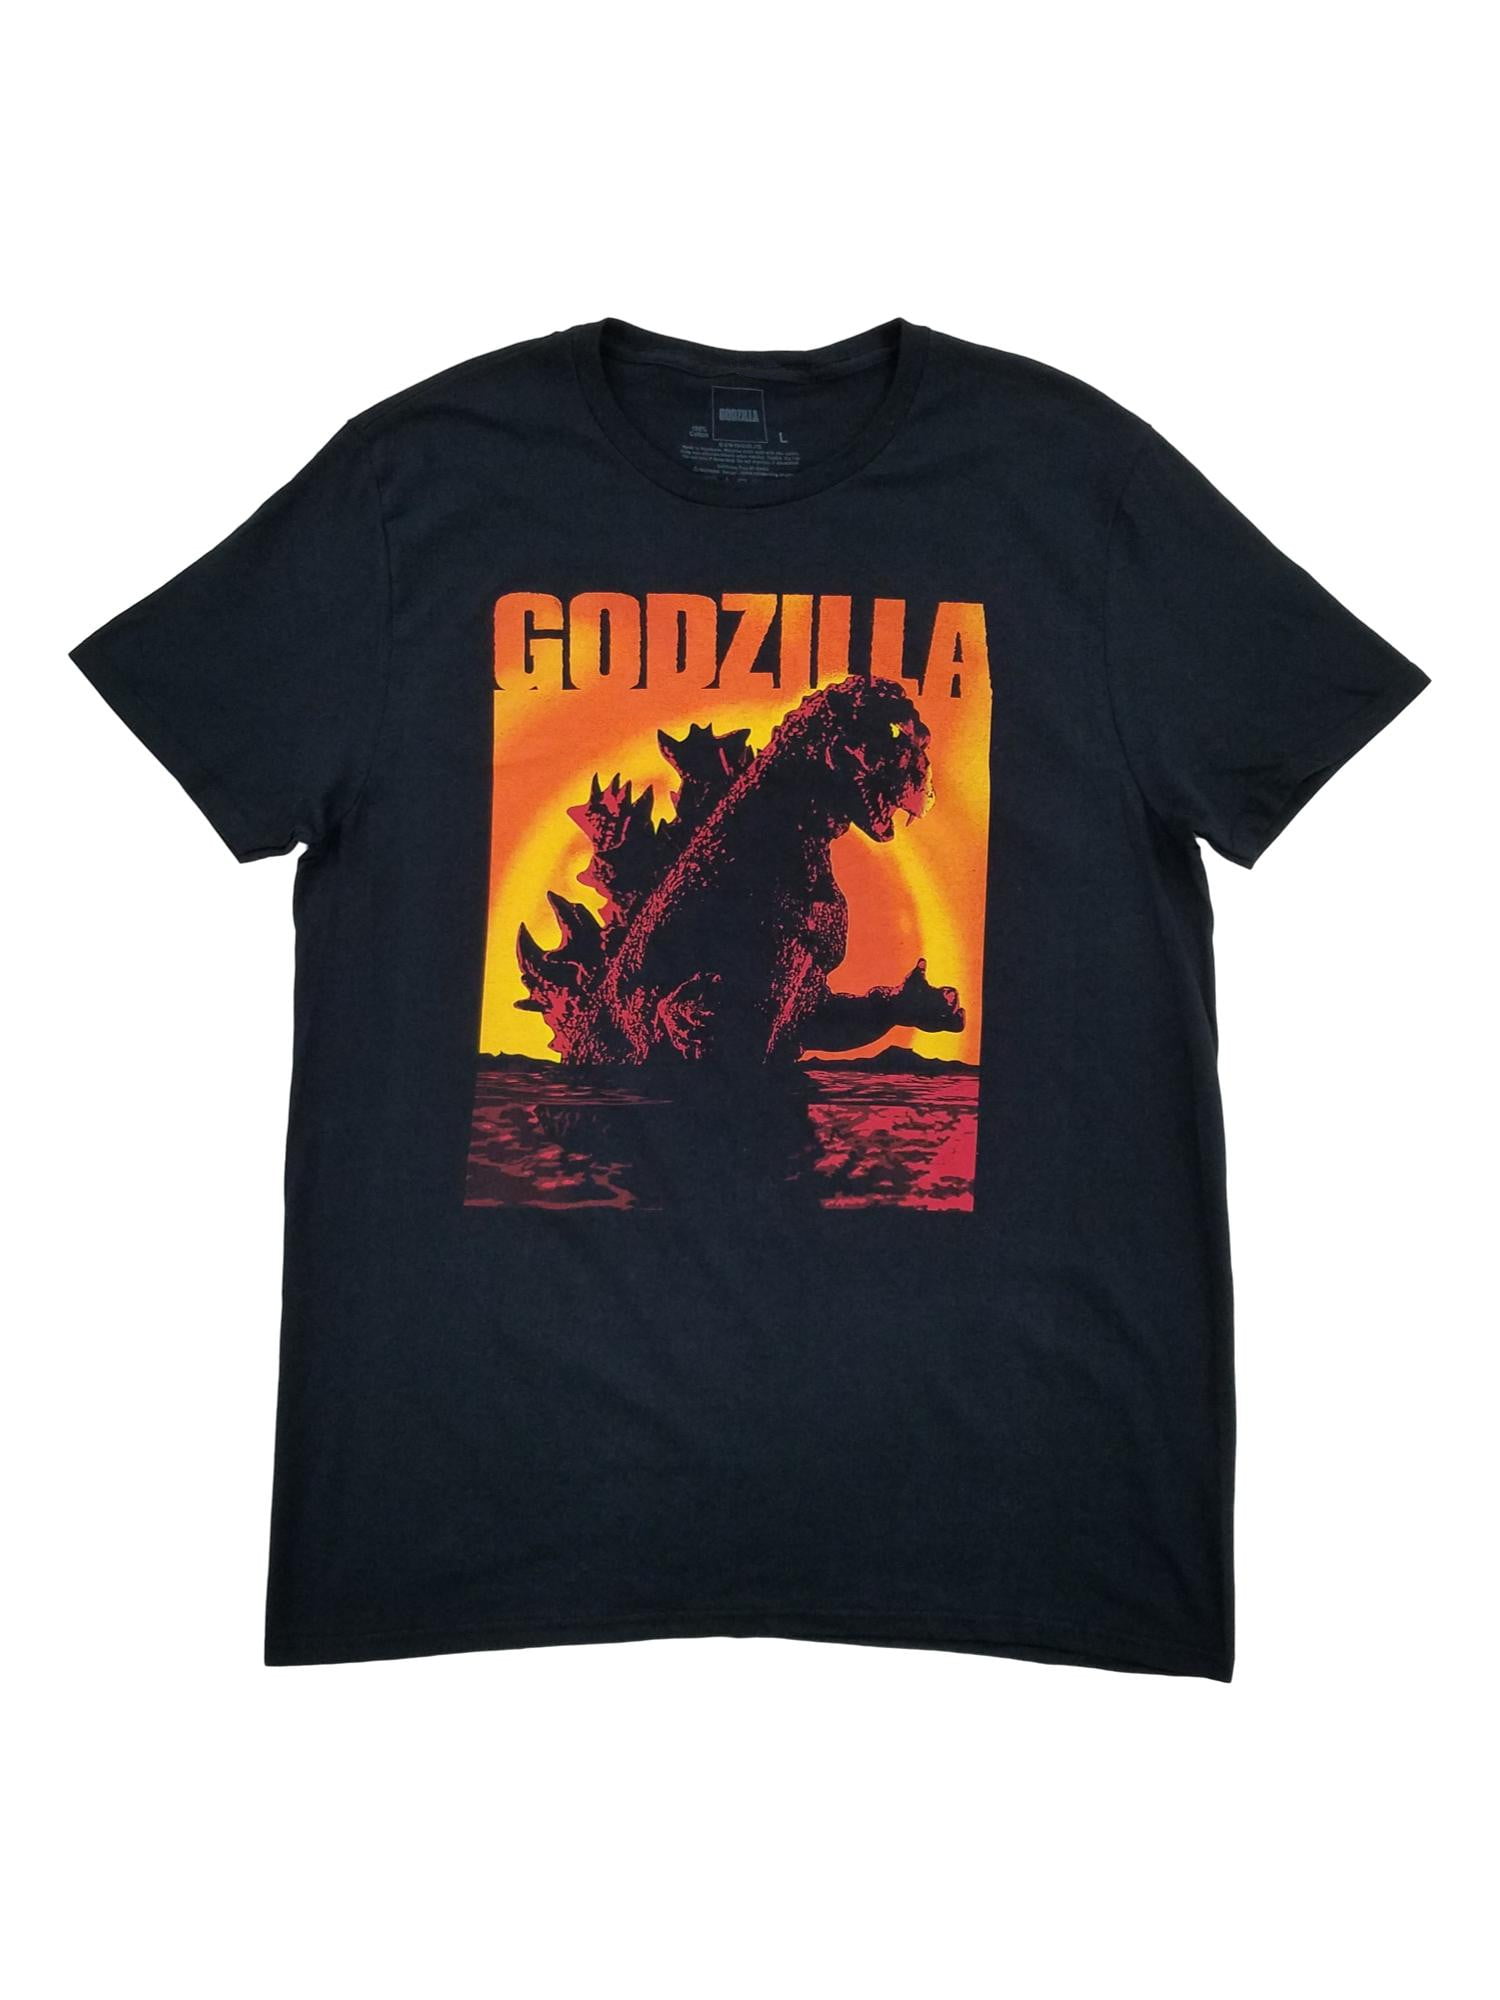 STDONE Mens Design Novelty Tee Shirt Godzilla Pictorial T-Shirts